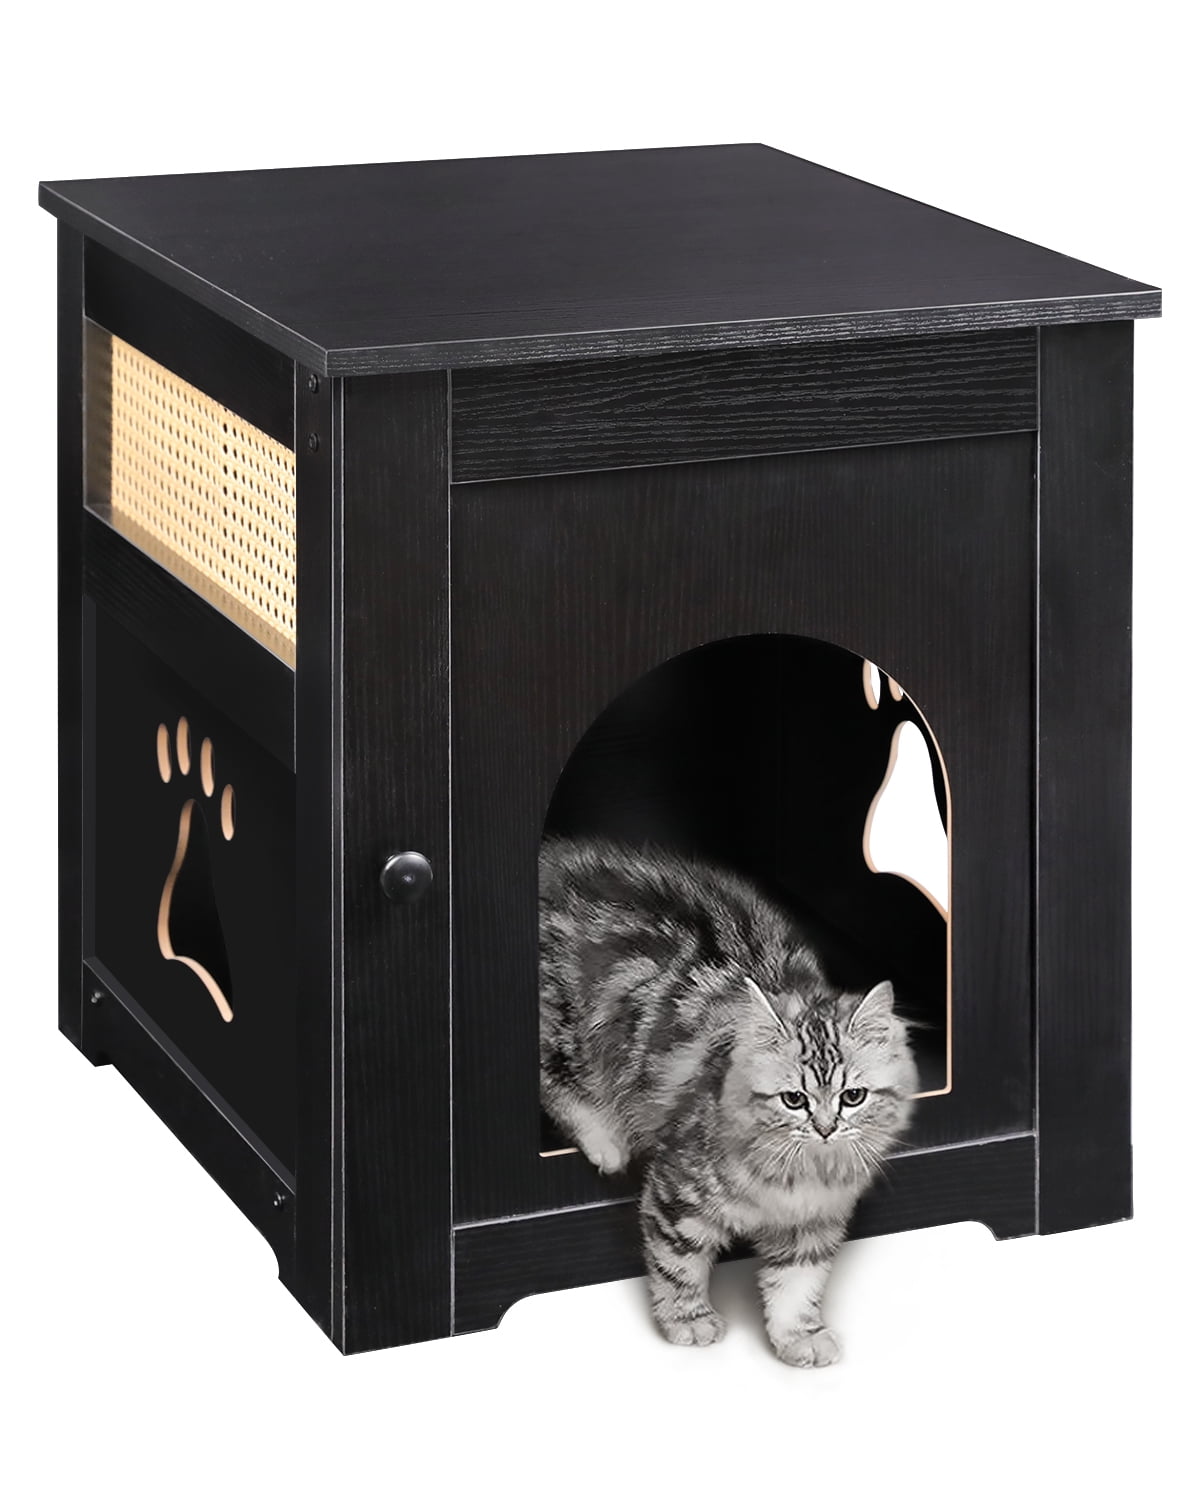 The Best Cat Litter Box Furniture of 2023